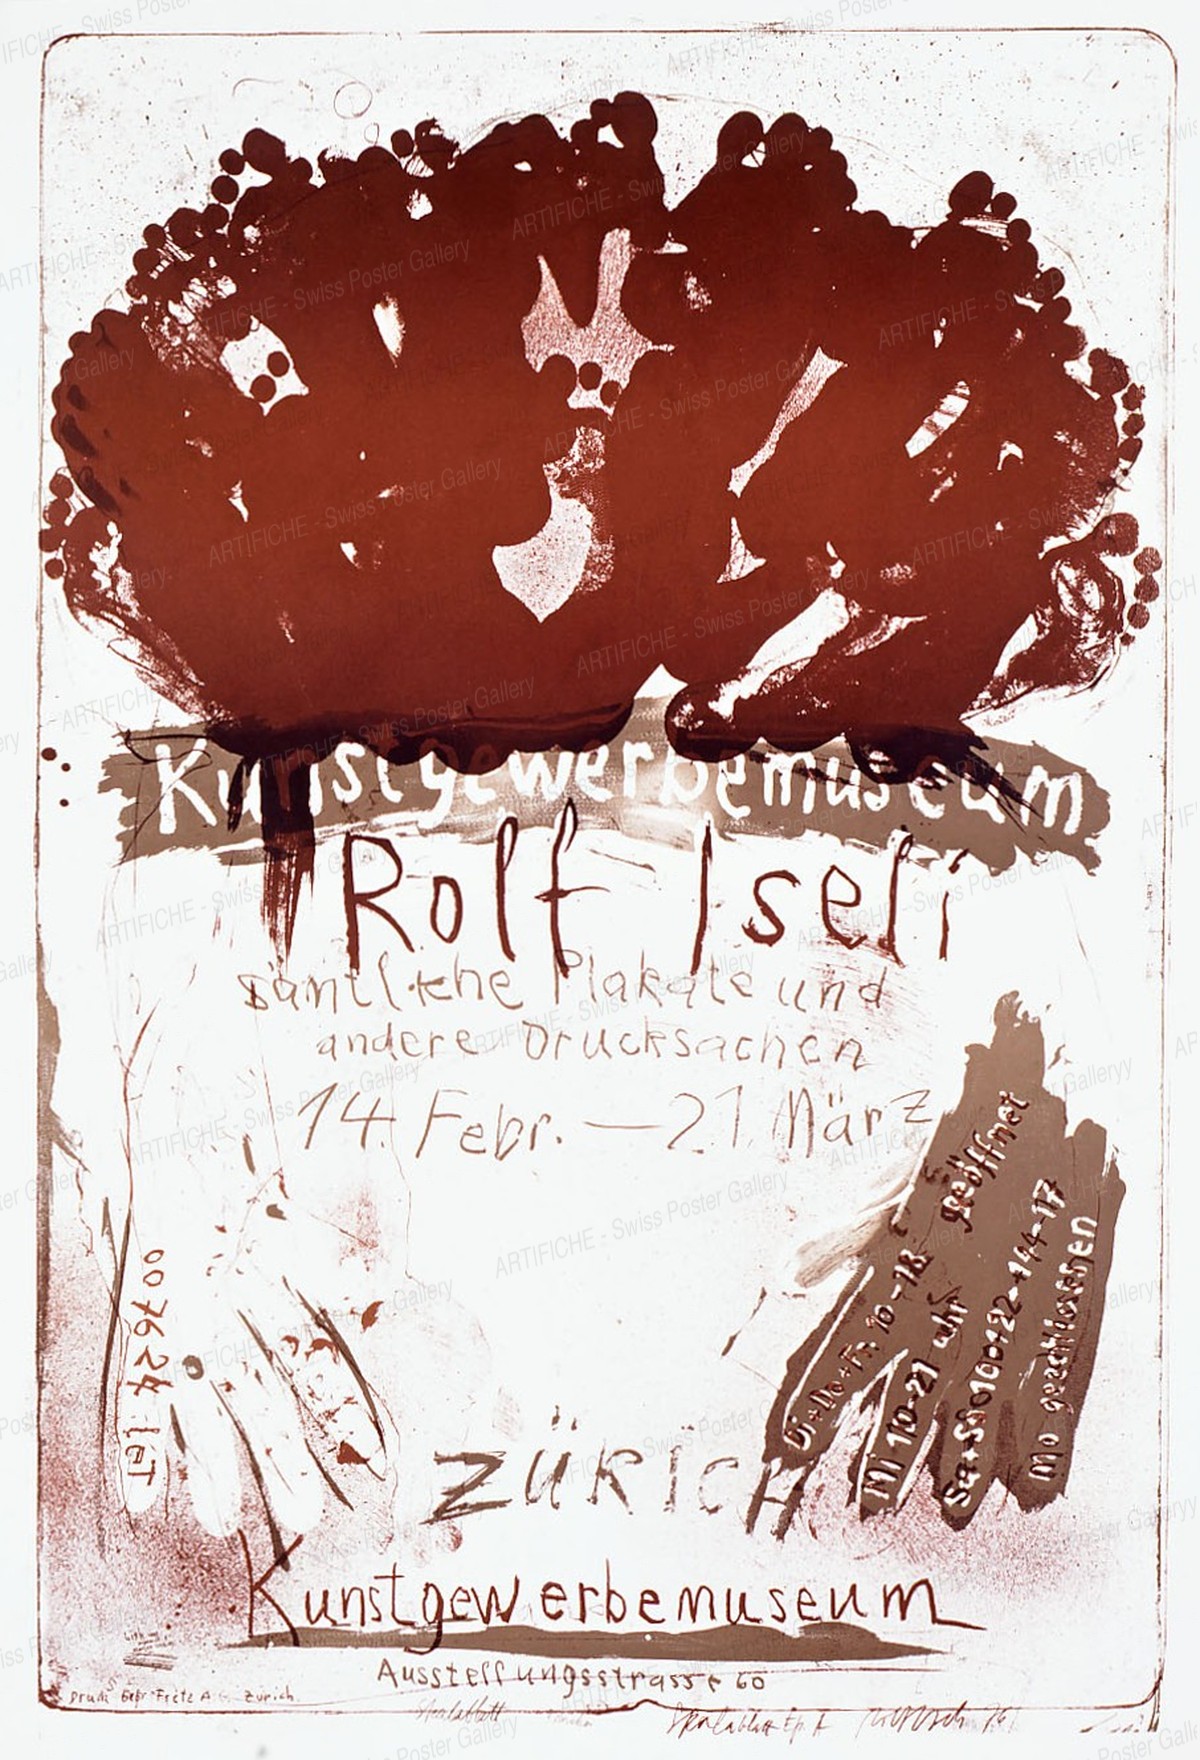 Kunstgewerbemuseum Zürich – Rolf Iseli, Rolf Iseli